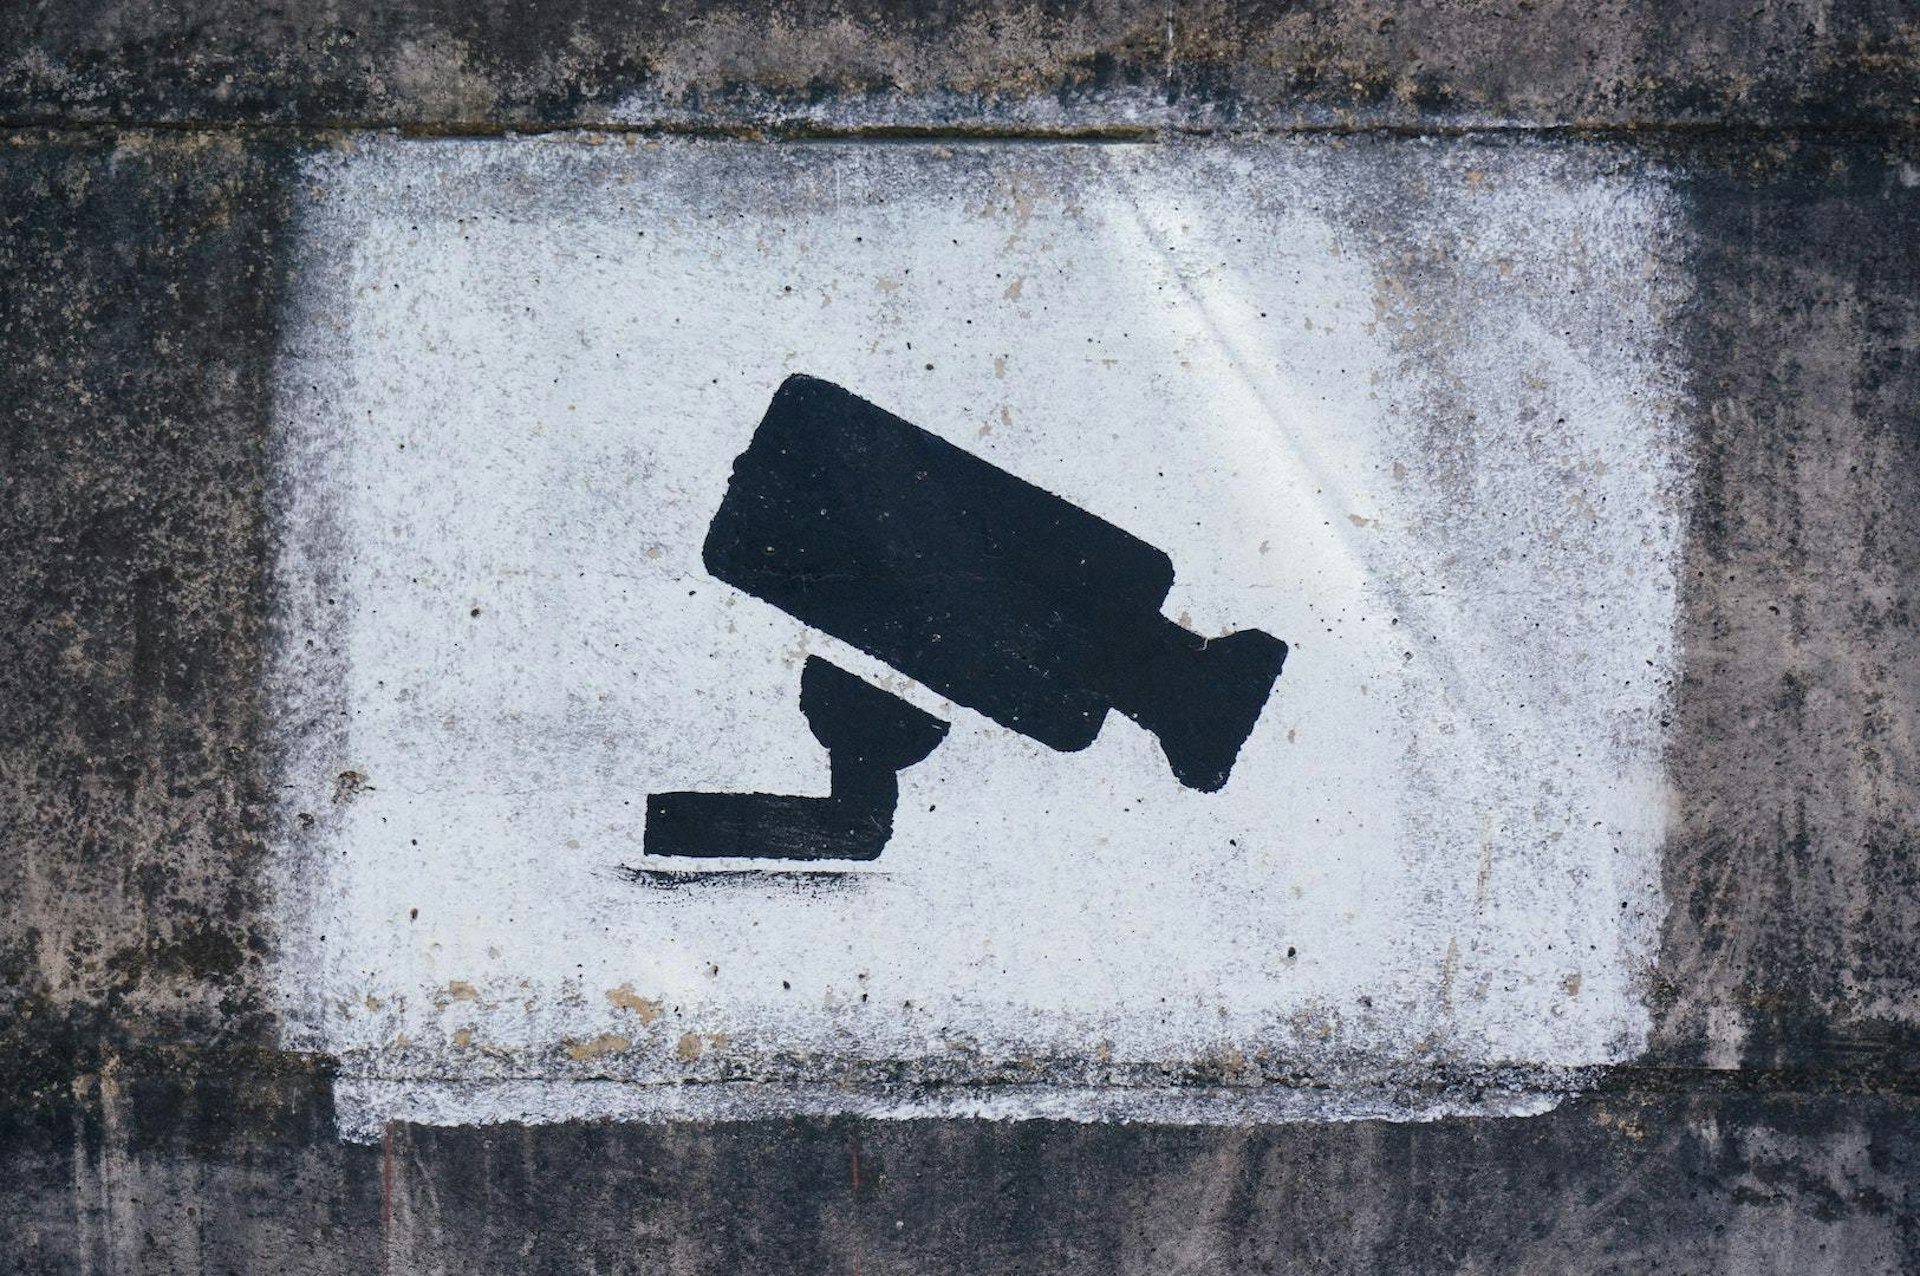 On TikTok, people are fuelling surveillance culture